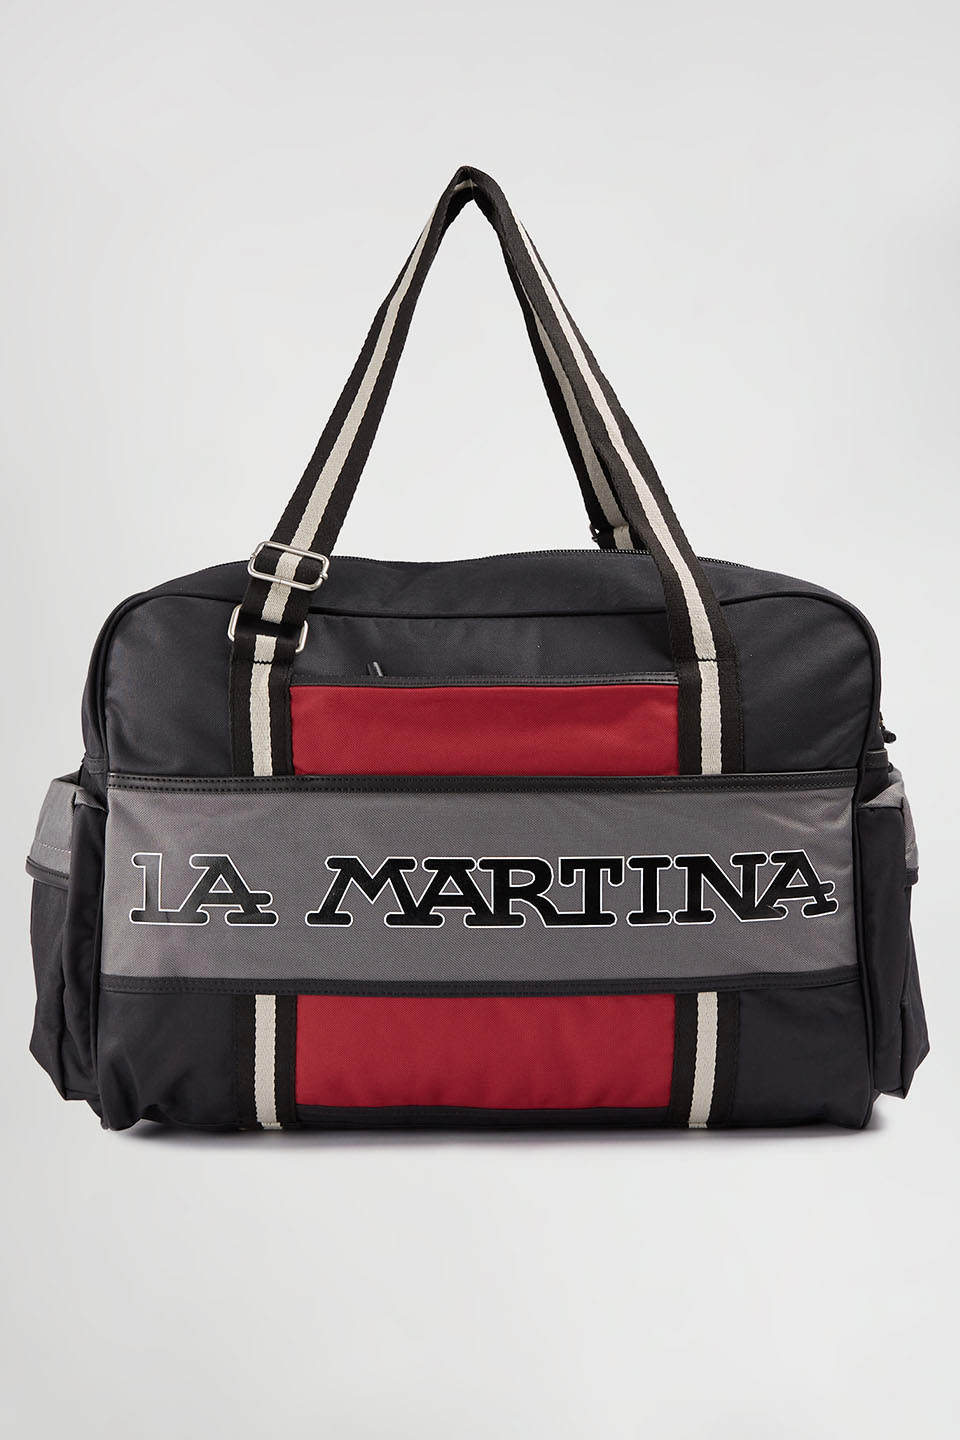 Borsone in nylon - La Martina - Official Online Shop